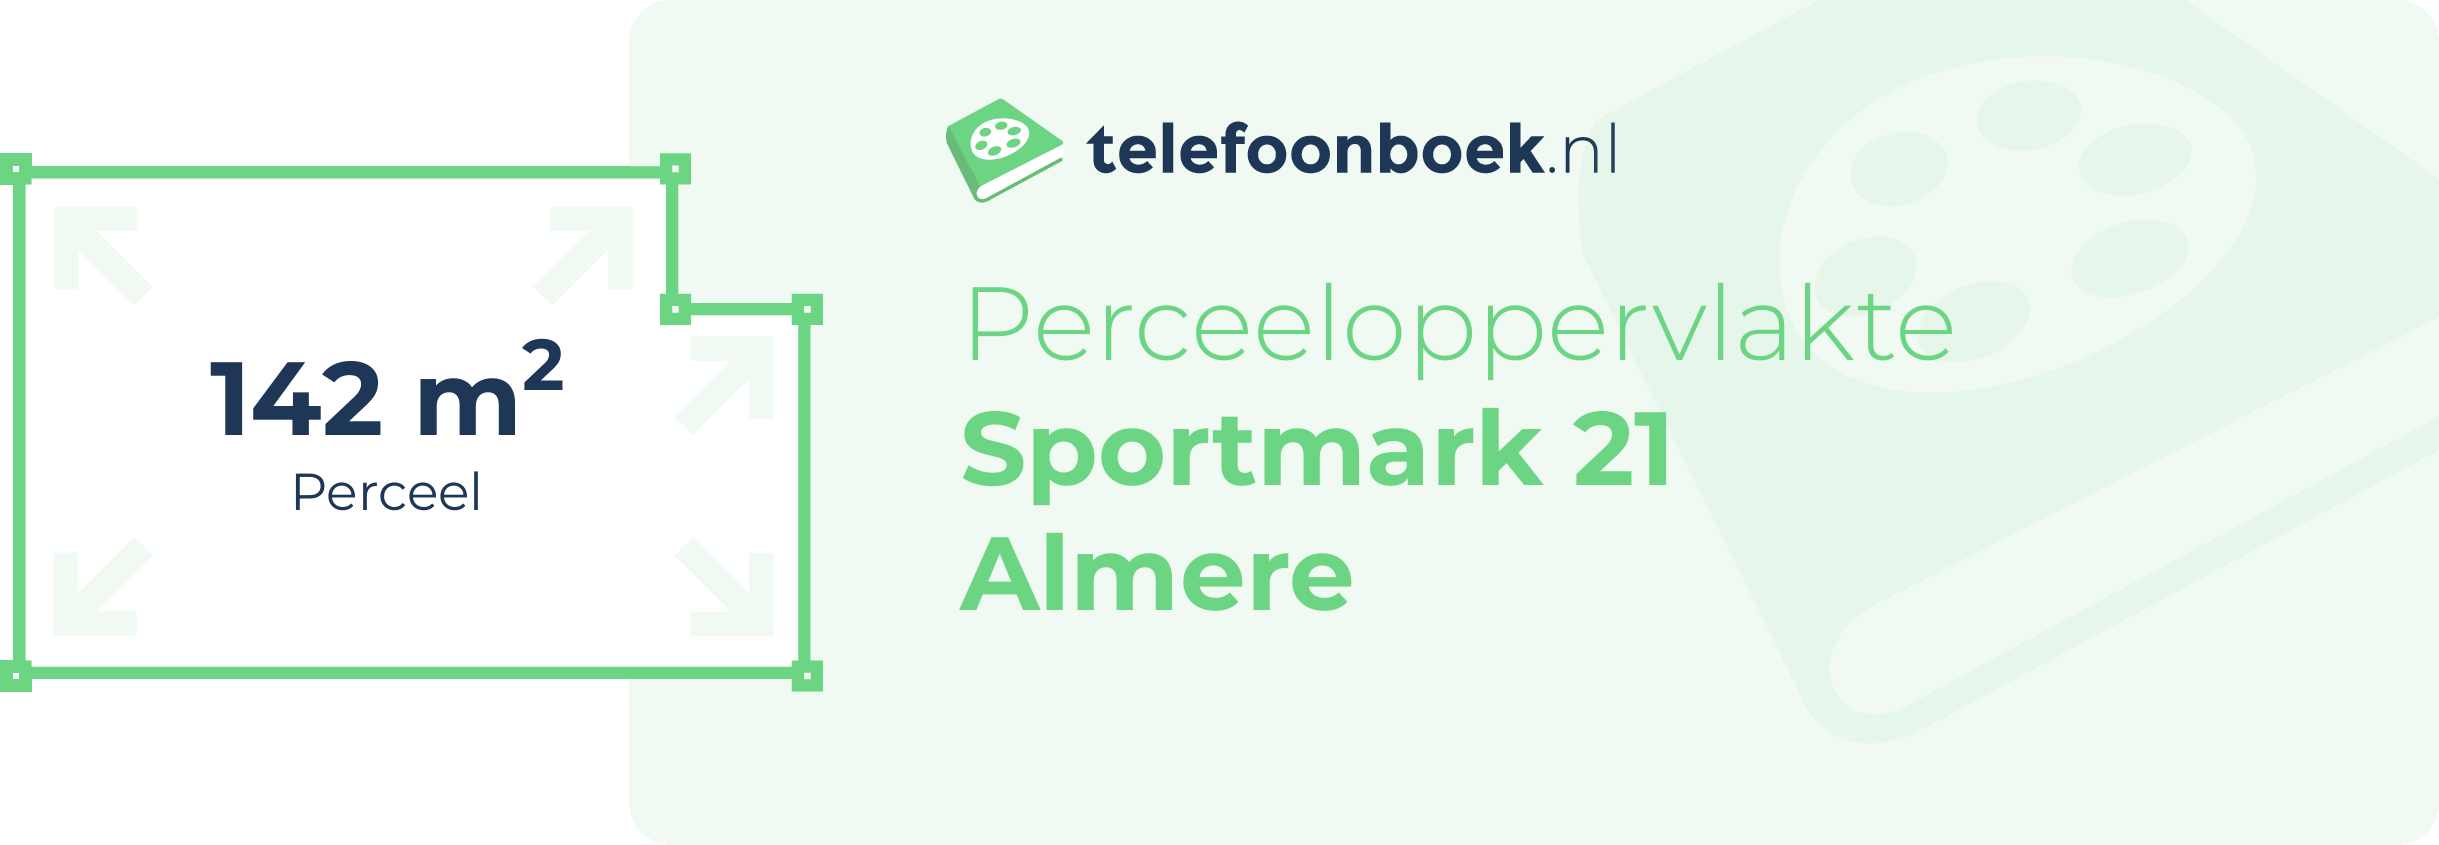 Perceeloppervlakte Sportmark 21 Almere